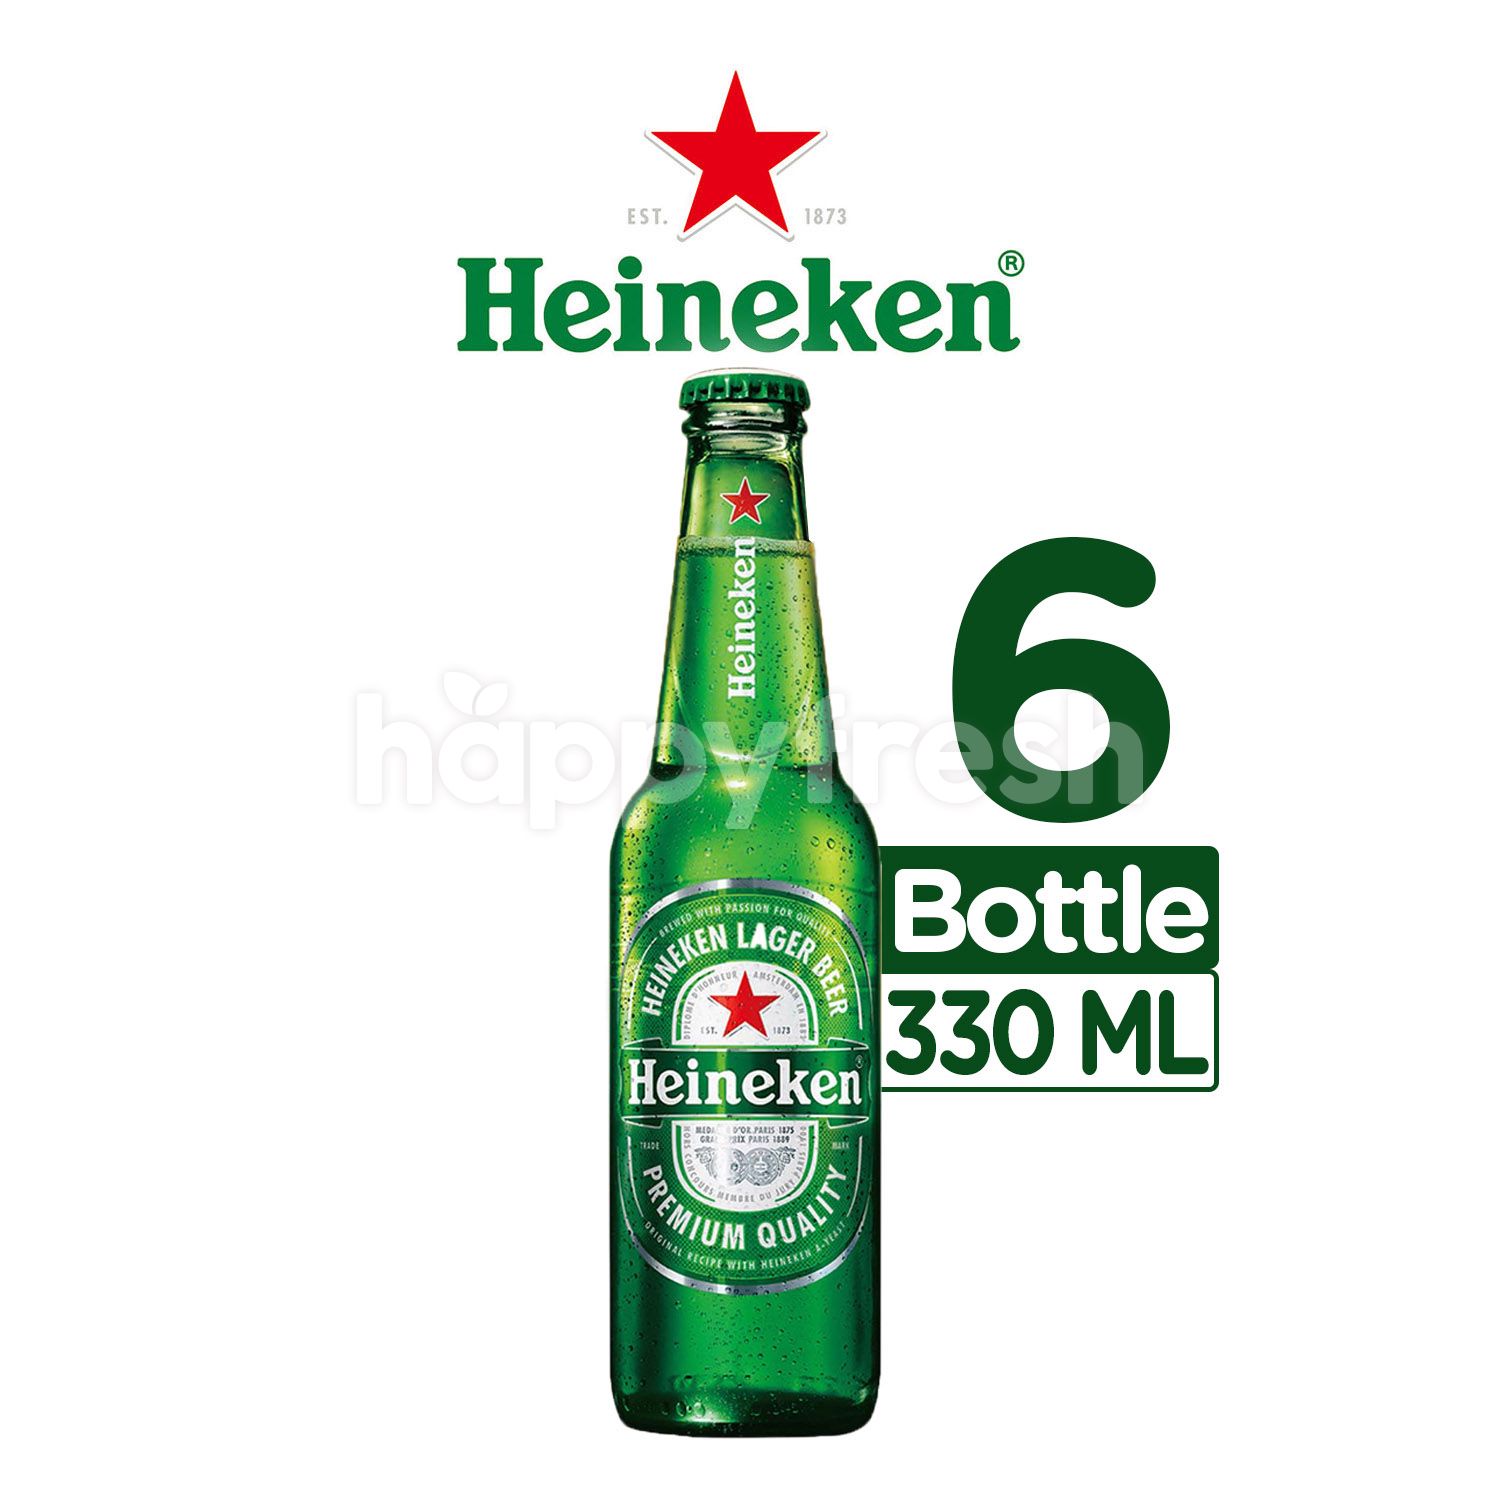 Пивные 6 букв. Хайнекен лагер бутылка. Бренды Хайнекен Интернешнл. Пиво 6%. Пиво 6.8 градусов.